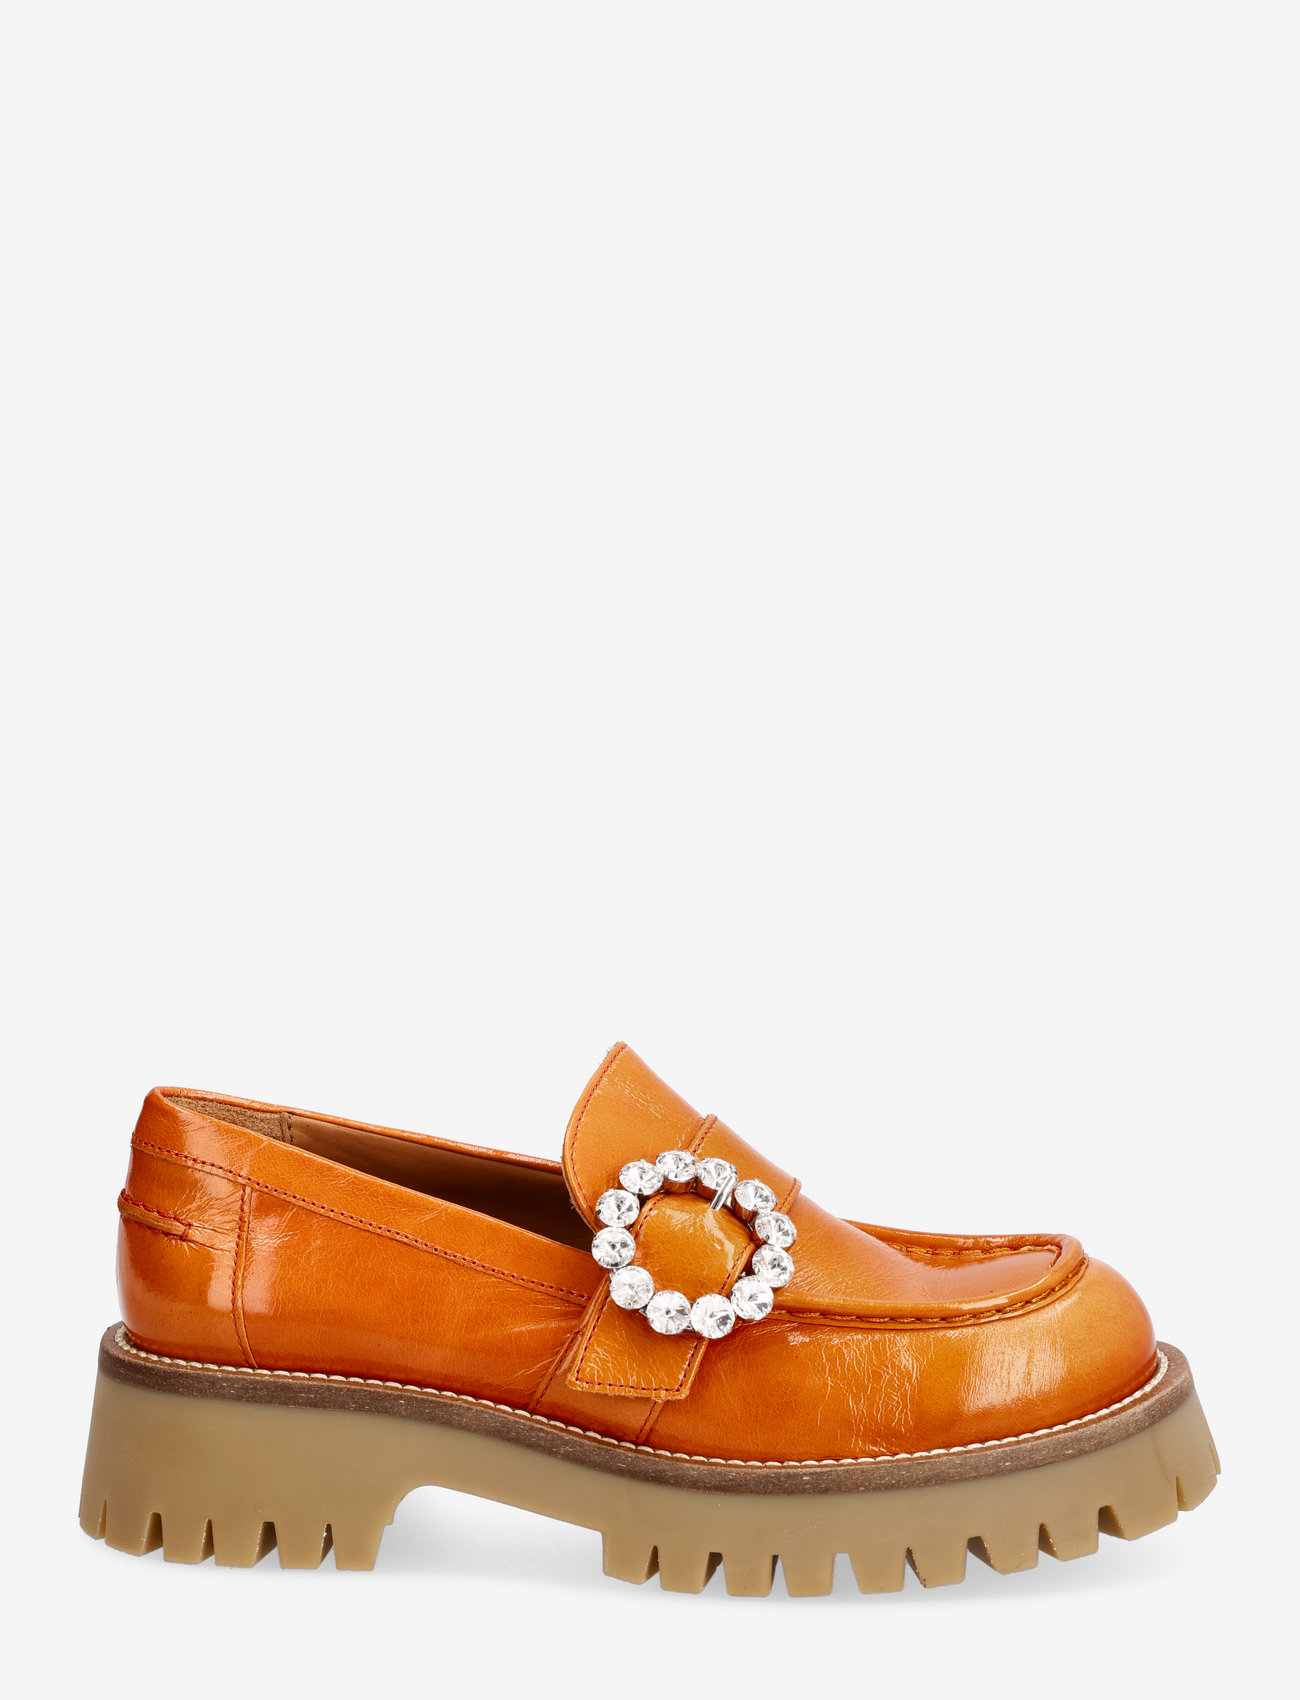 Billi Bi - Shoes - geburtstagsgeschenke - orange naplack 227 - 1